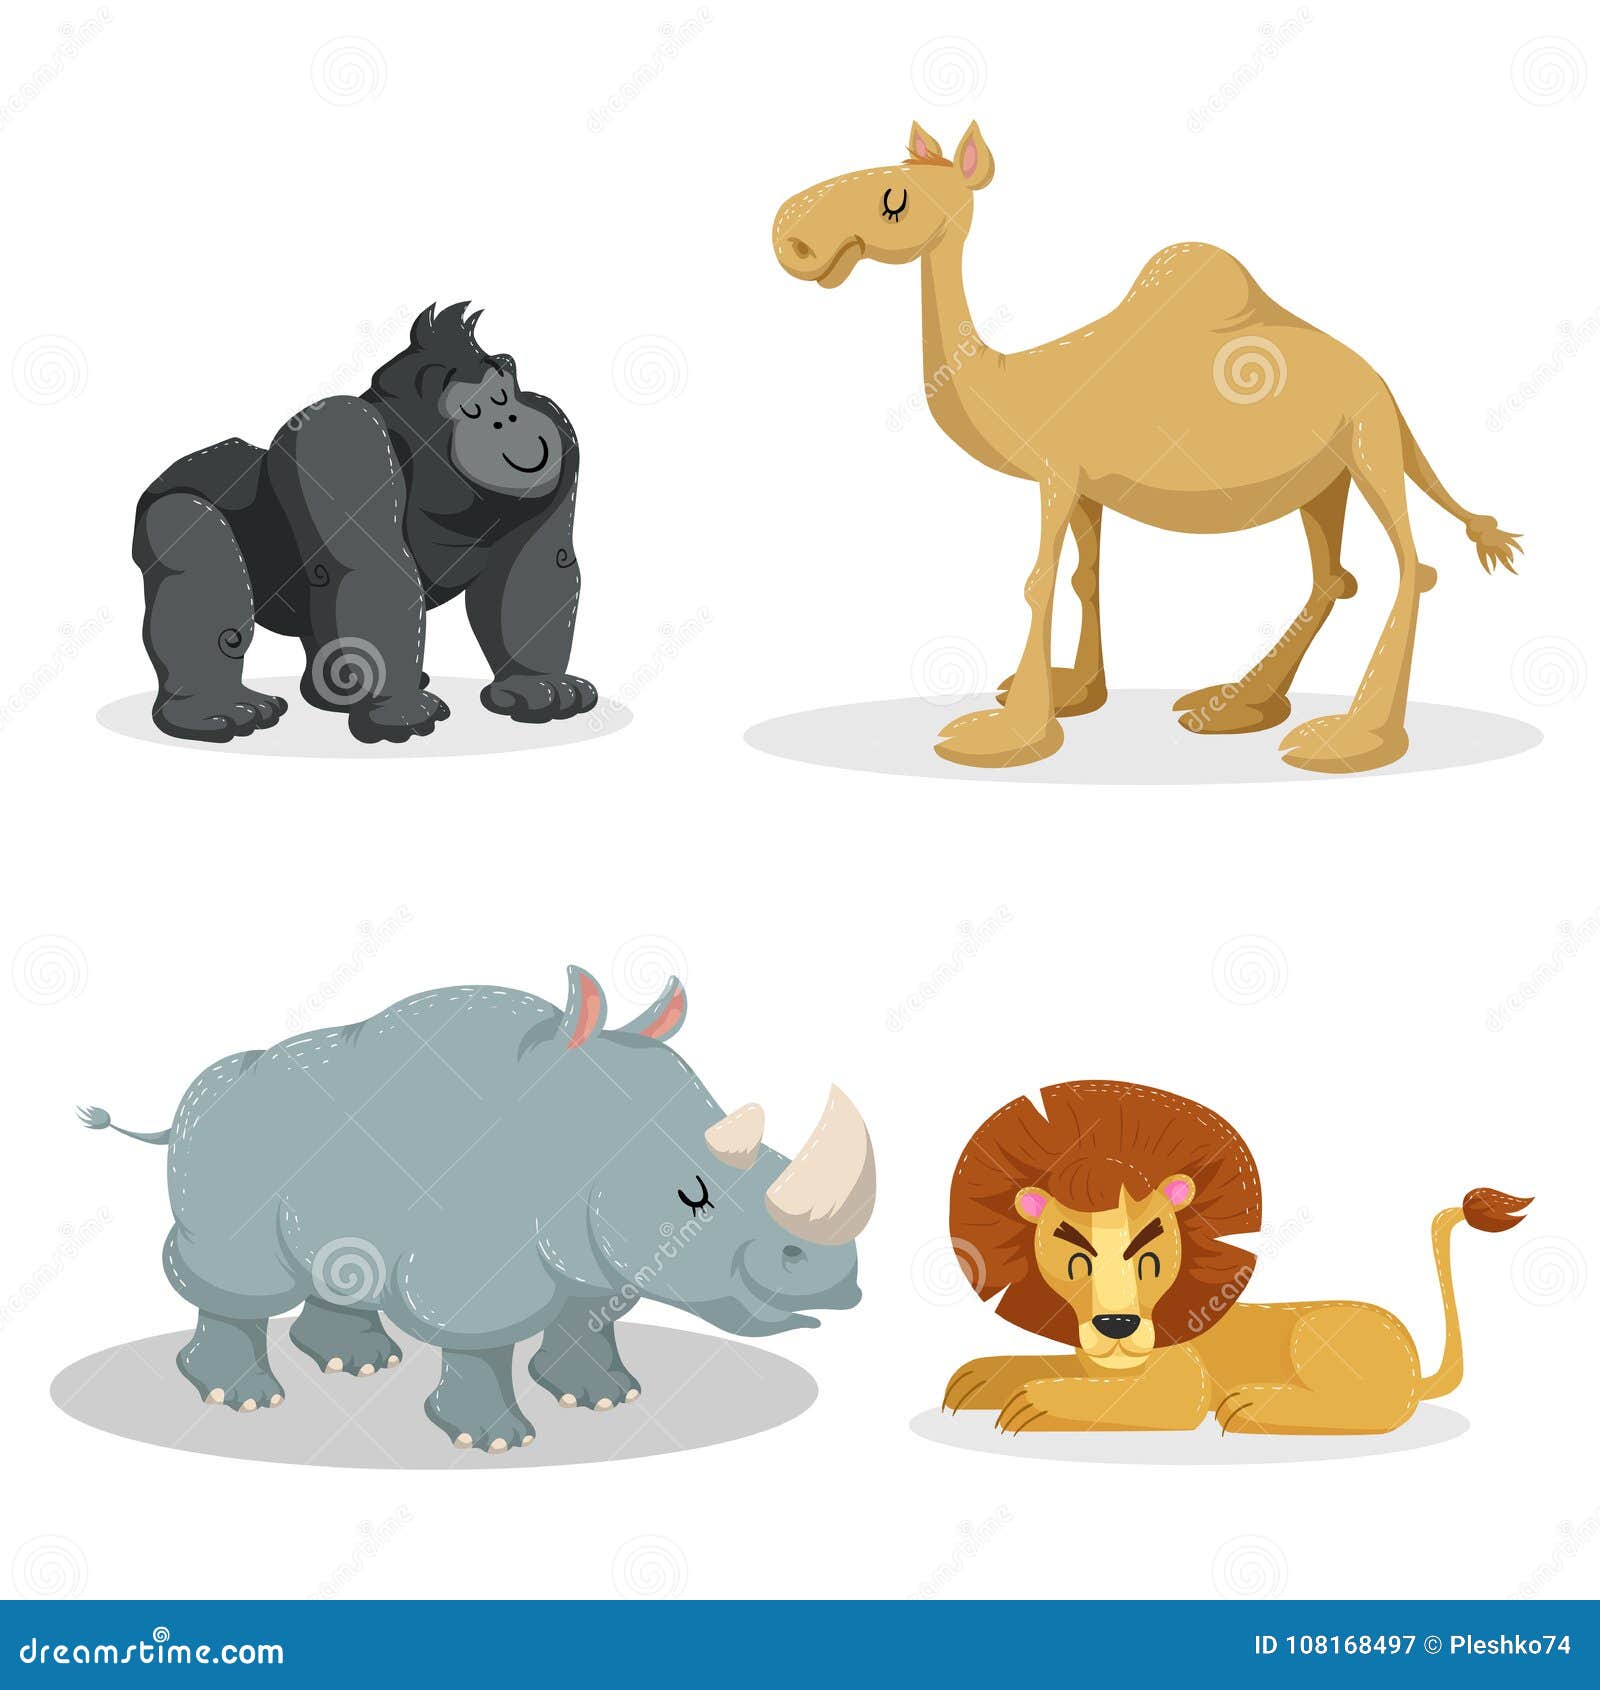 cartoon trendy style african animals set. gorilla monkey, lion, dromedary camel, rhiniceros. closed eyes and cheerful mascots.